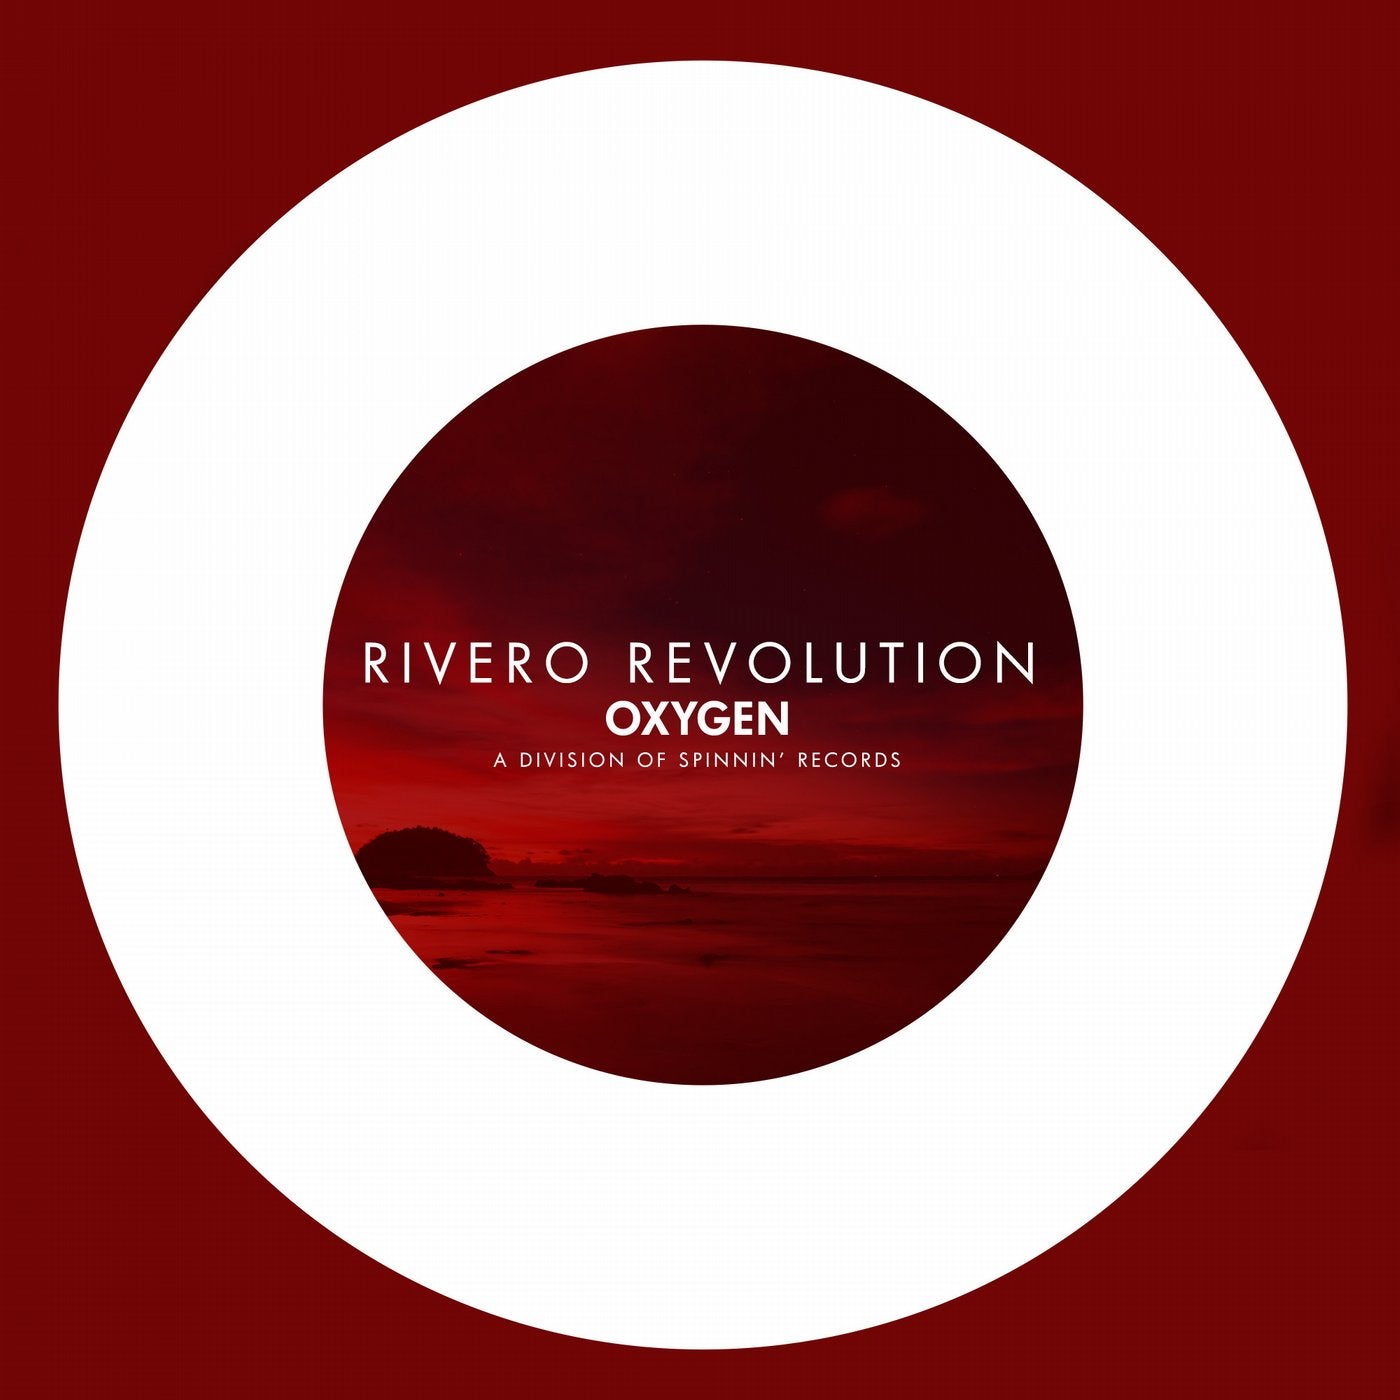 Revolution (Extended Mix)